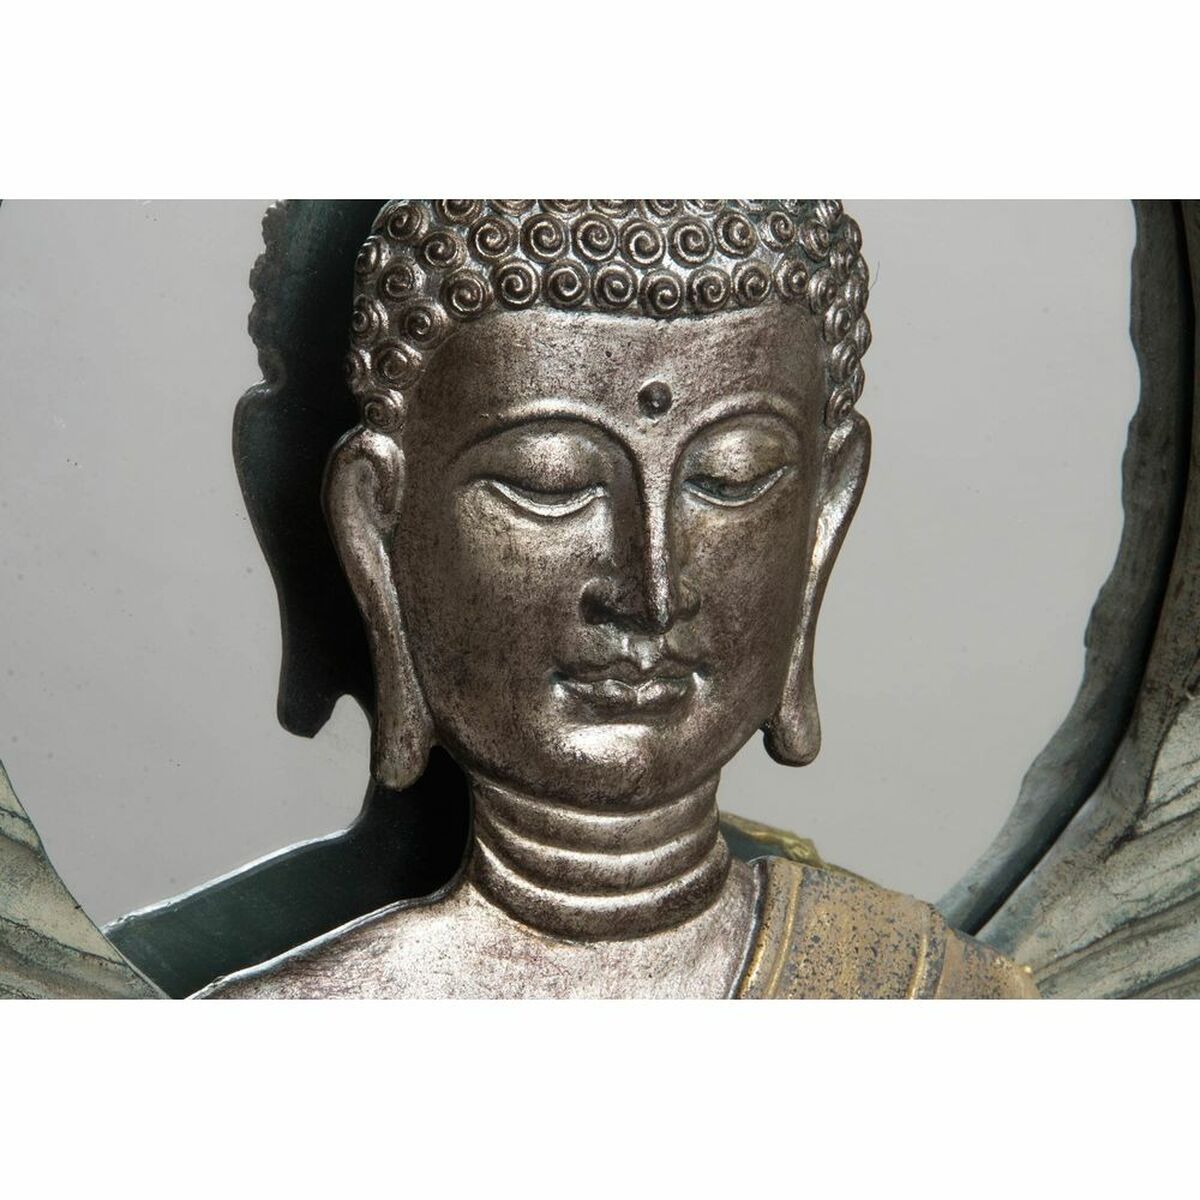 Buddhist Harmony - 59 x 5 x 59 cm